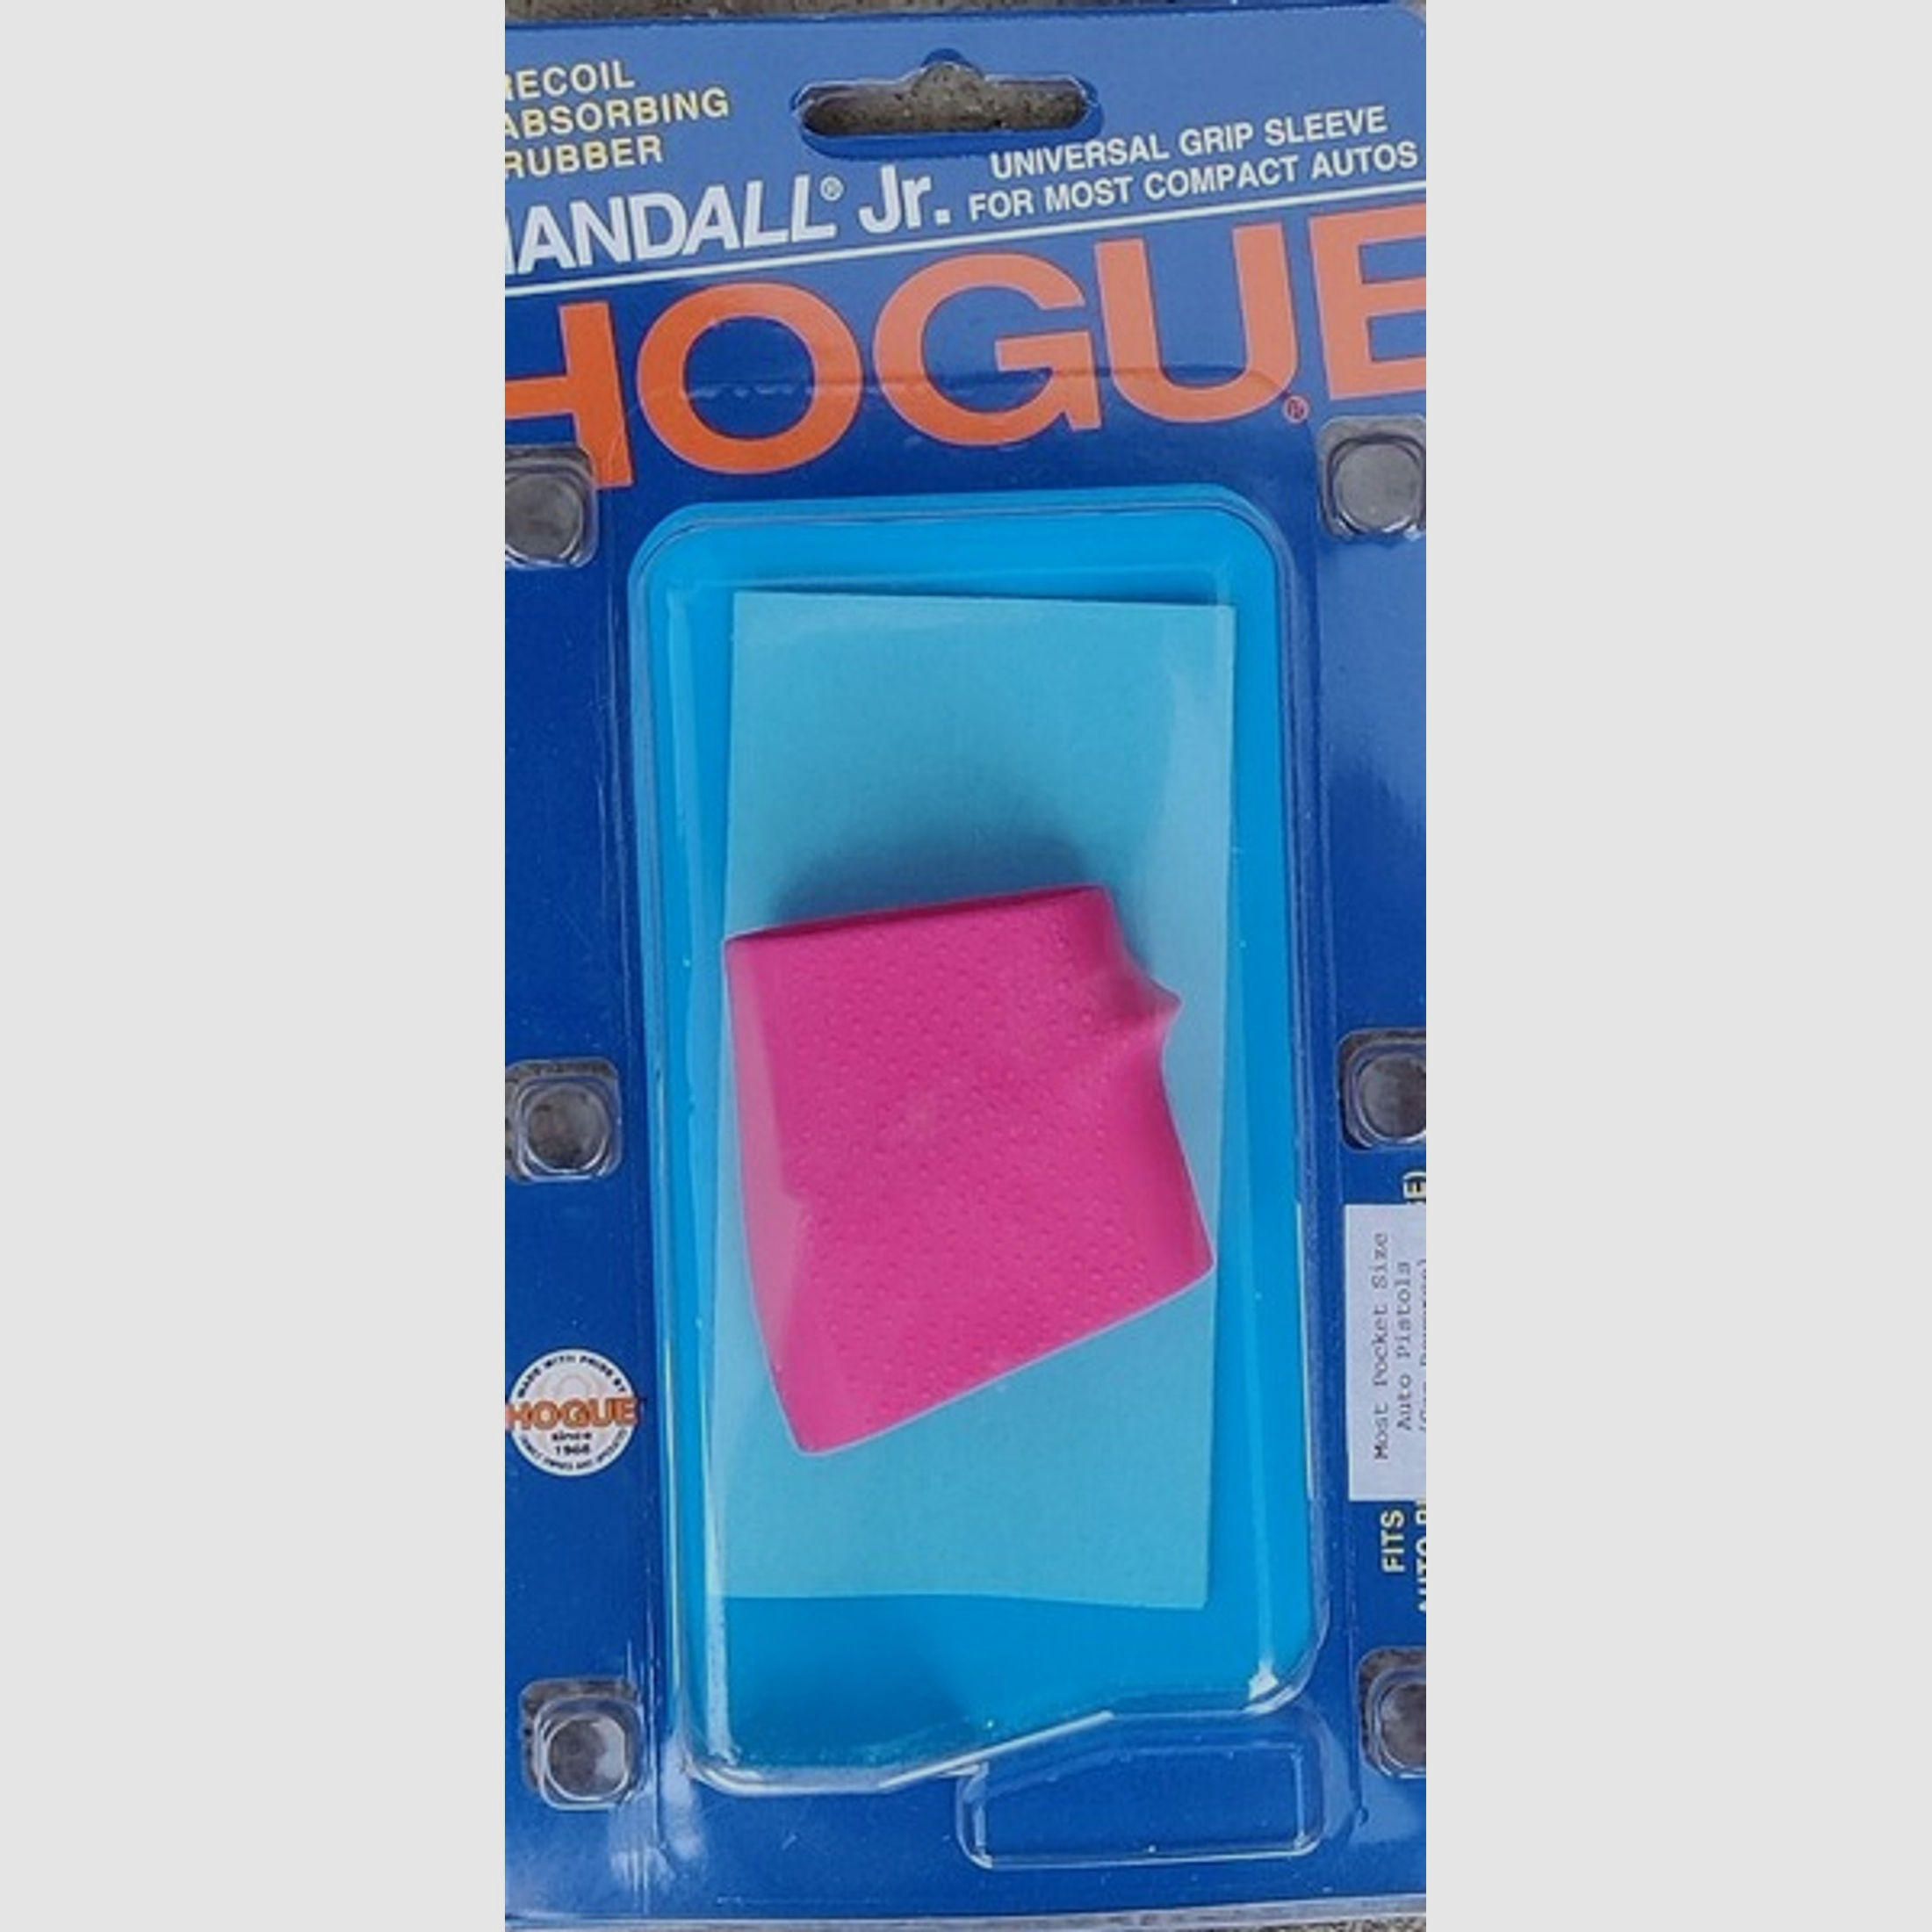 Hogue Handall jr. Universal pink